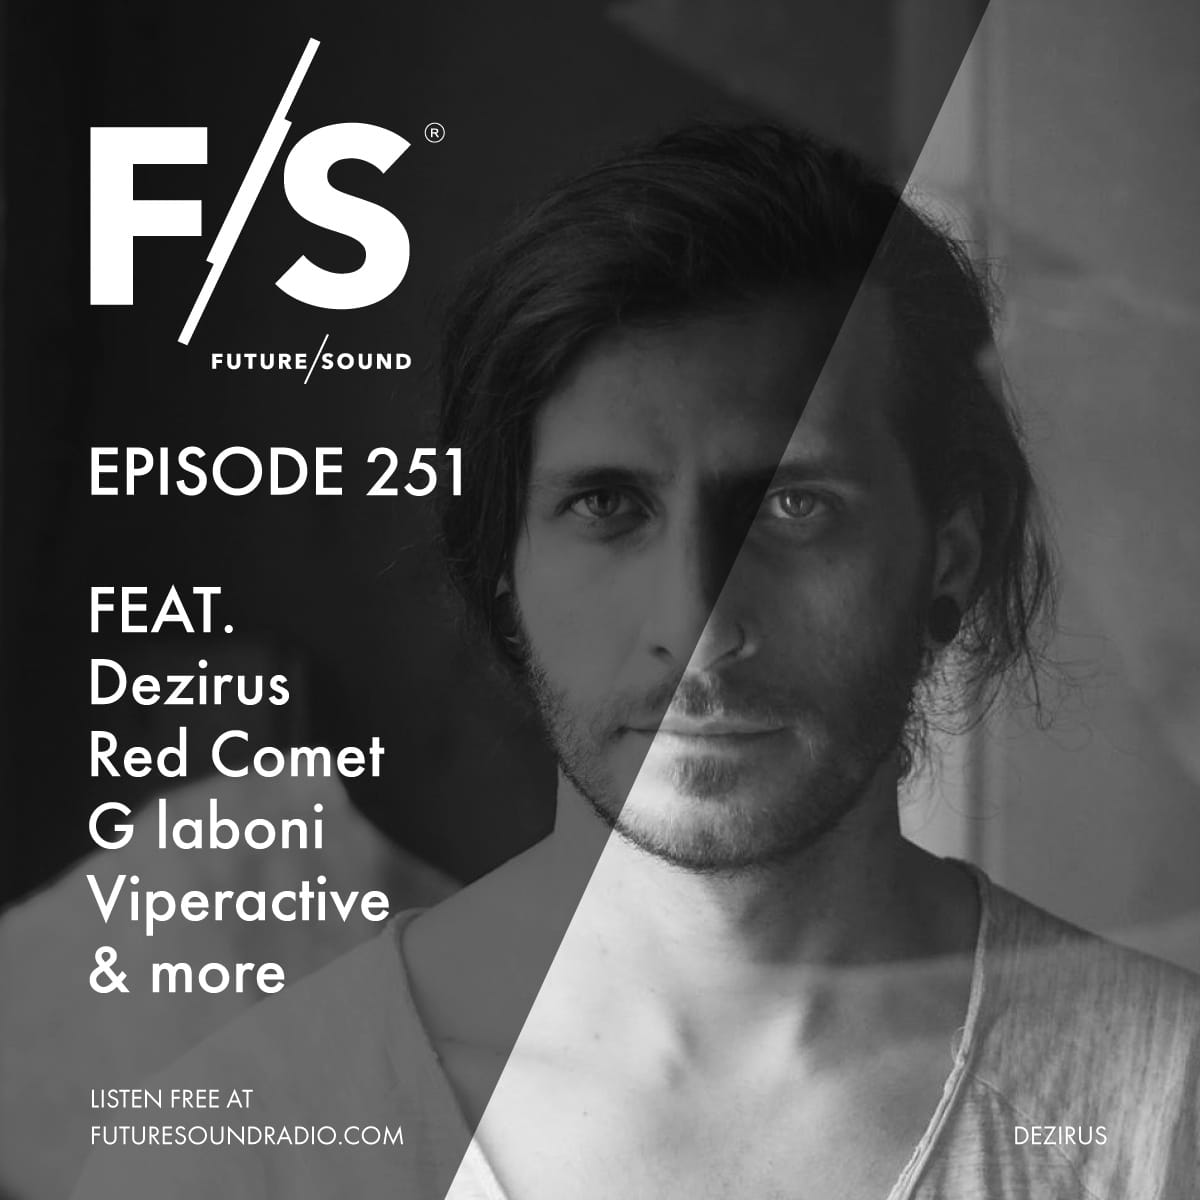 Future/Sound Episode 251 feat. Dezirus, Red Comet, G Iaboni, Viperactive, and more